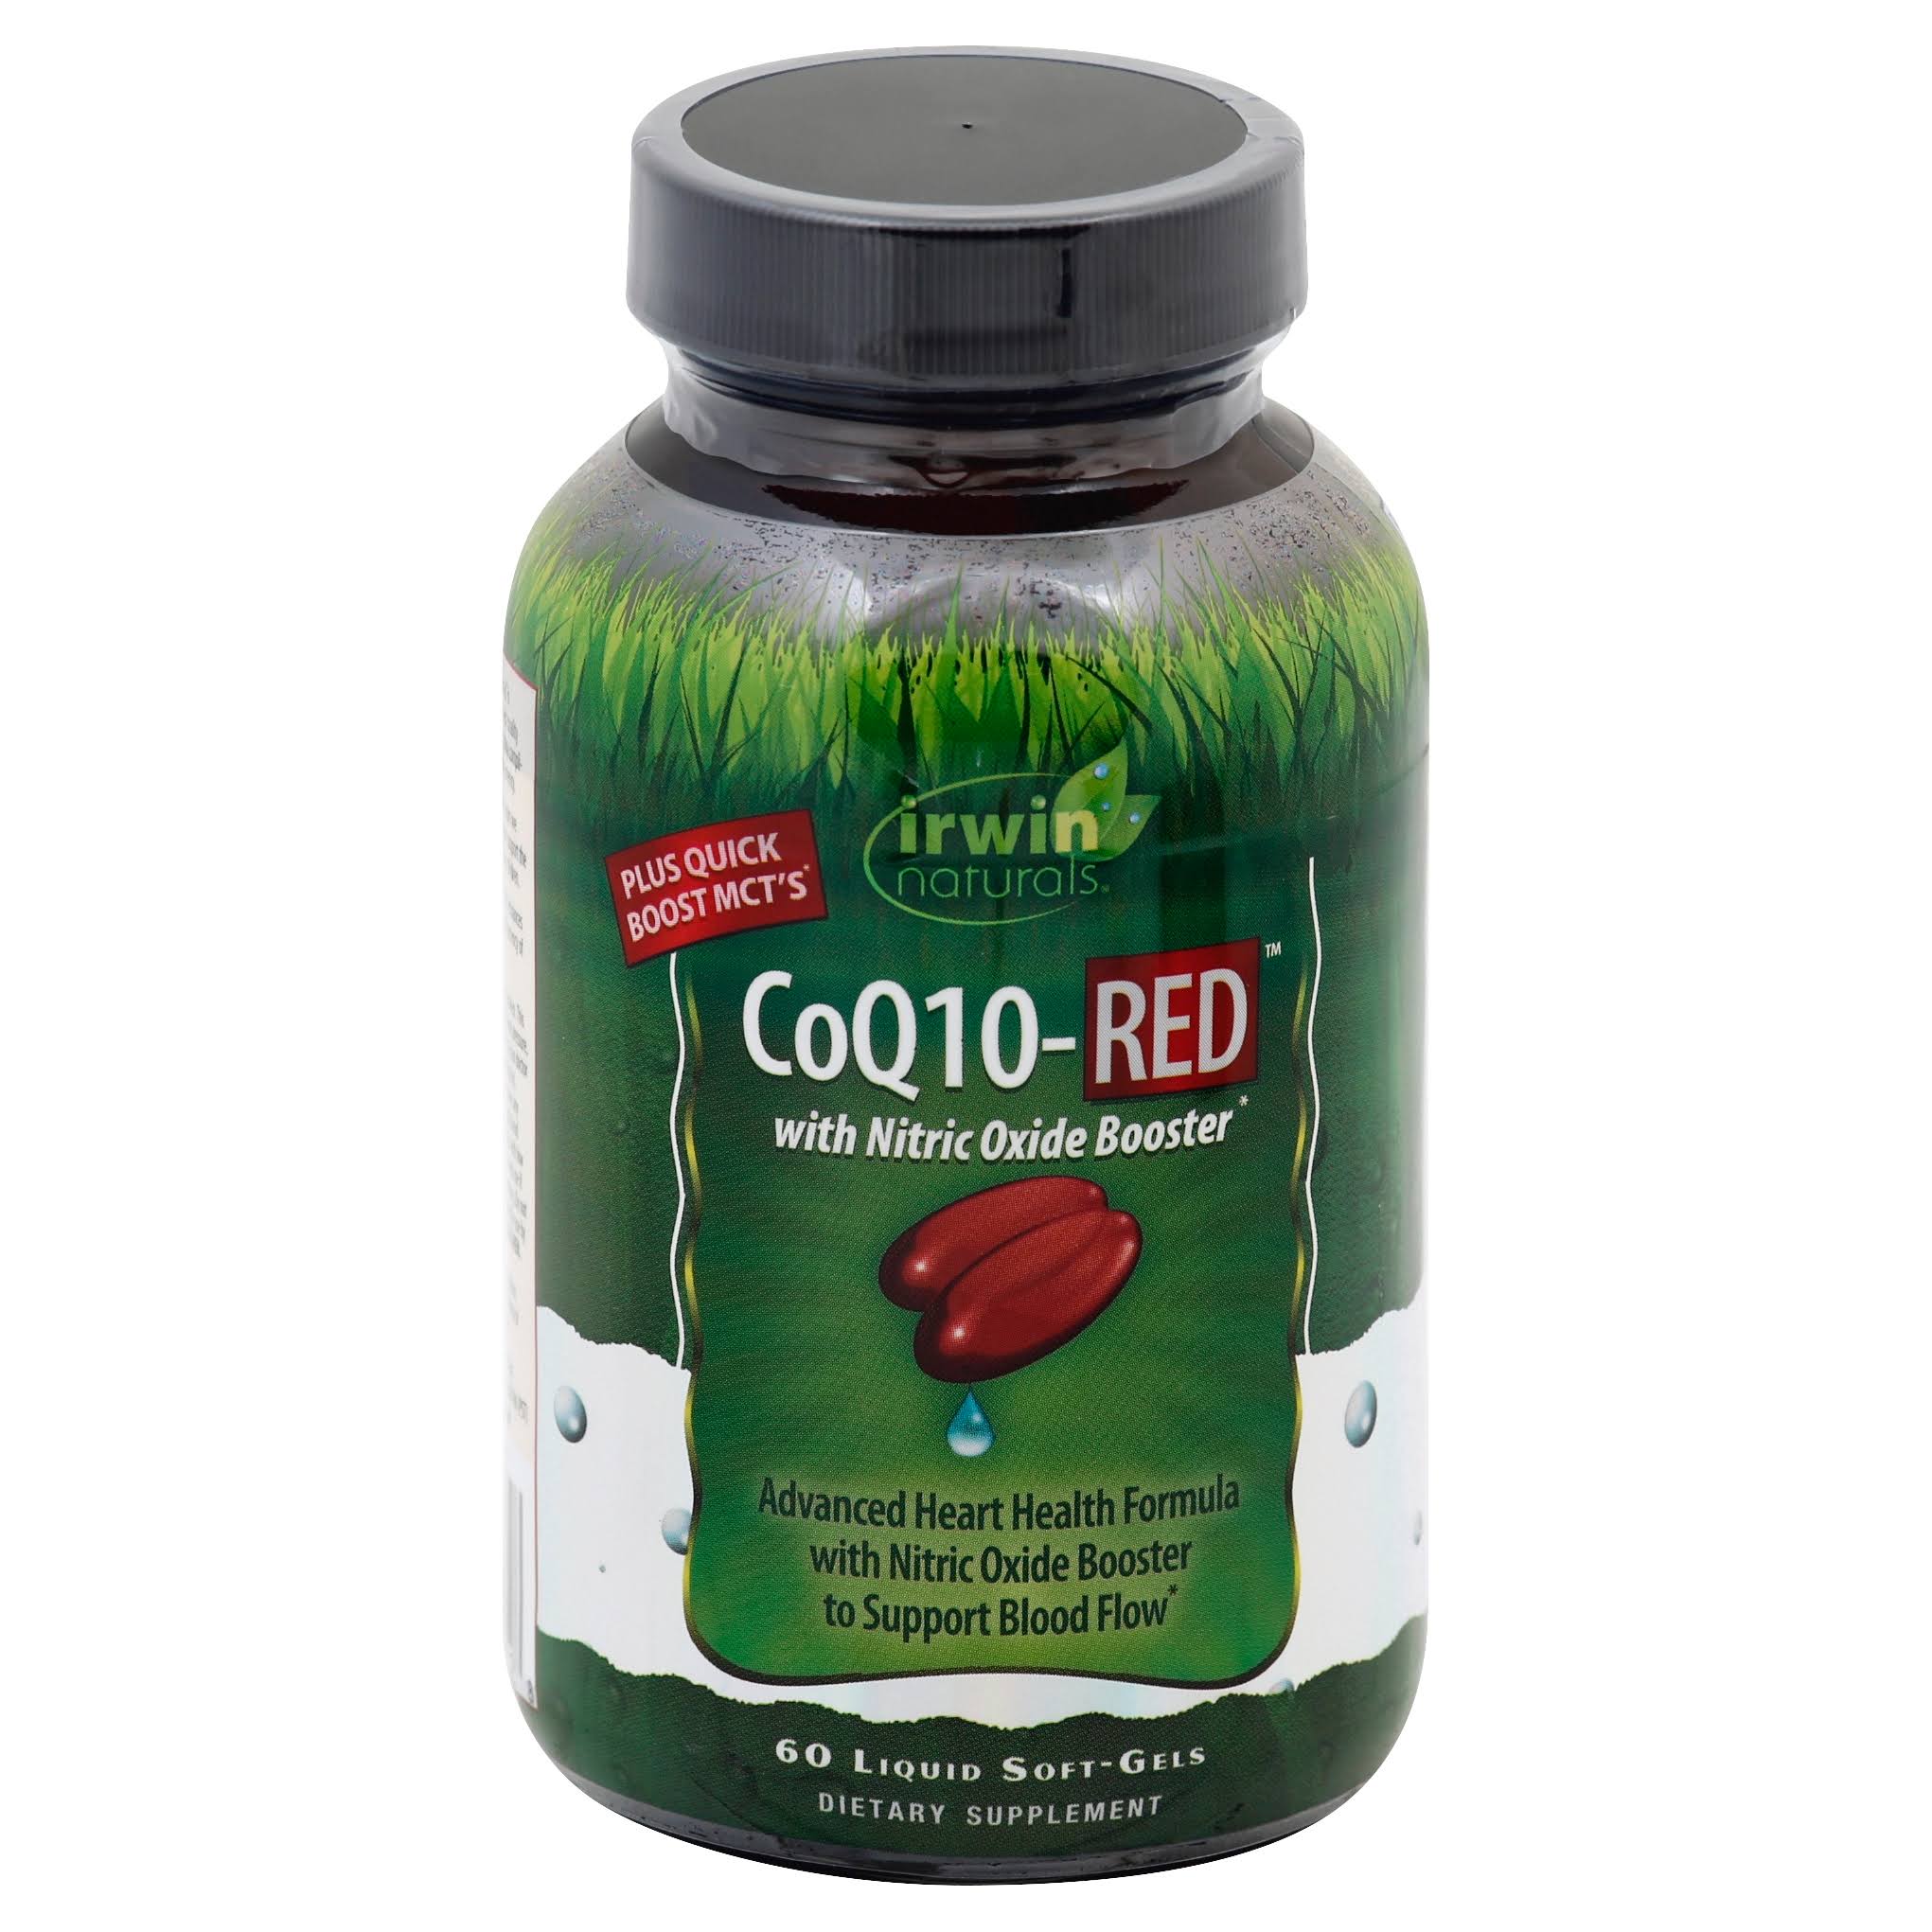 Irwin Naturals Coq10 Red Dietary Supplement - 60 Liquid Softgel